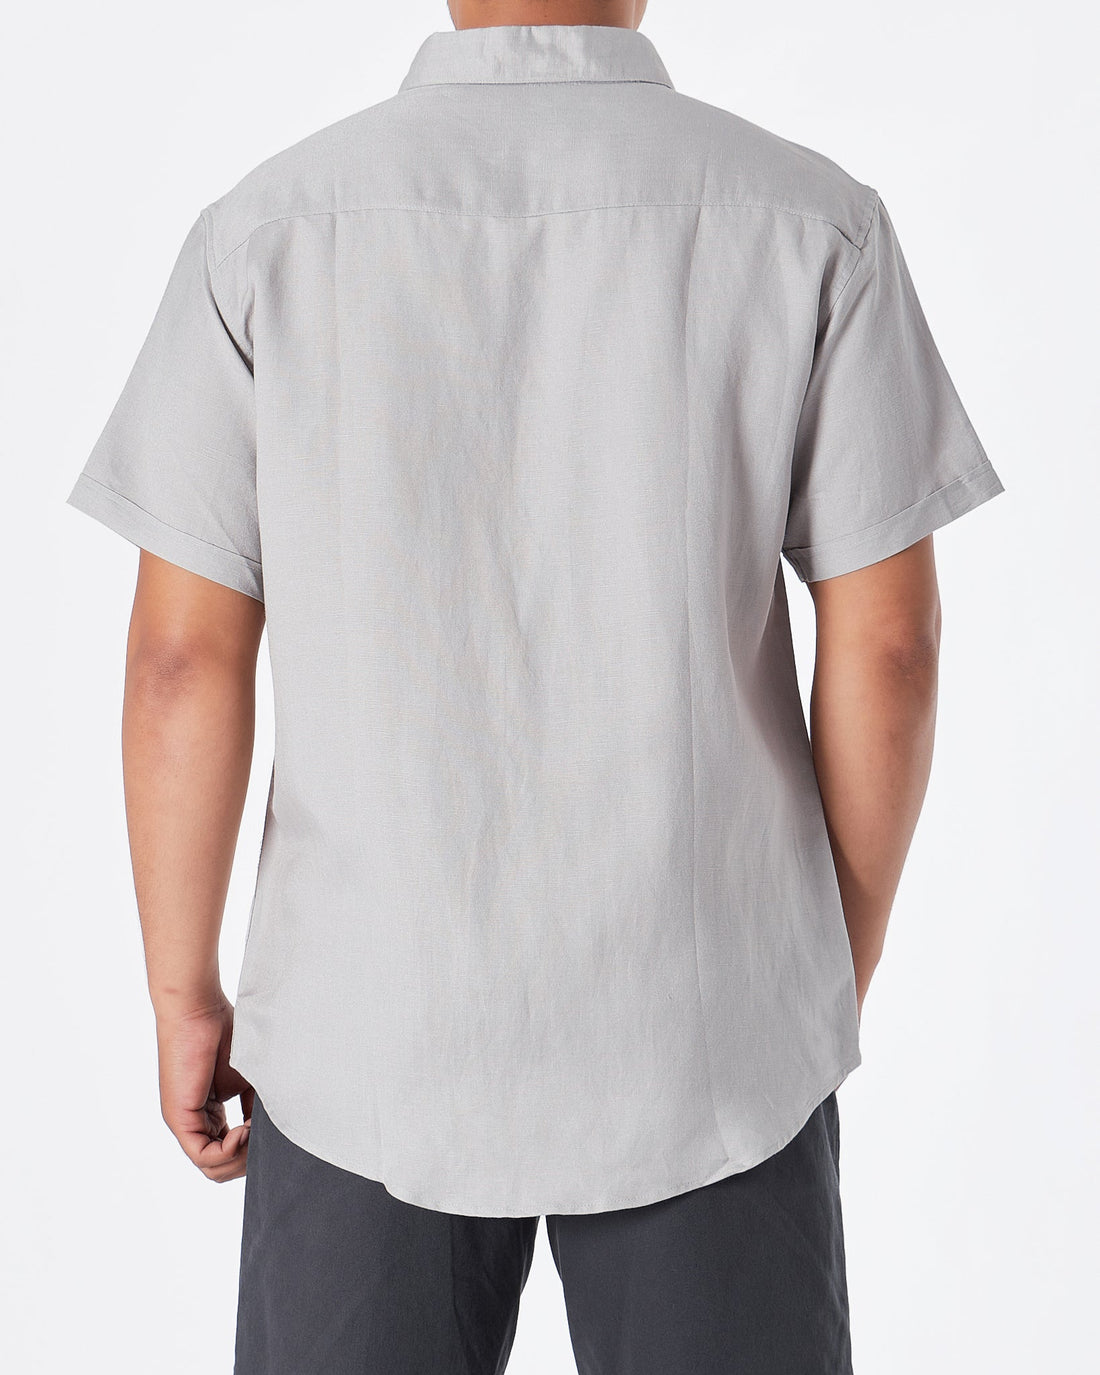 MOI OUTFIT-RL Cotton Men Grey Shirts Short Sleeve 28.90